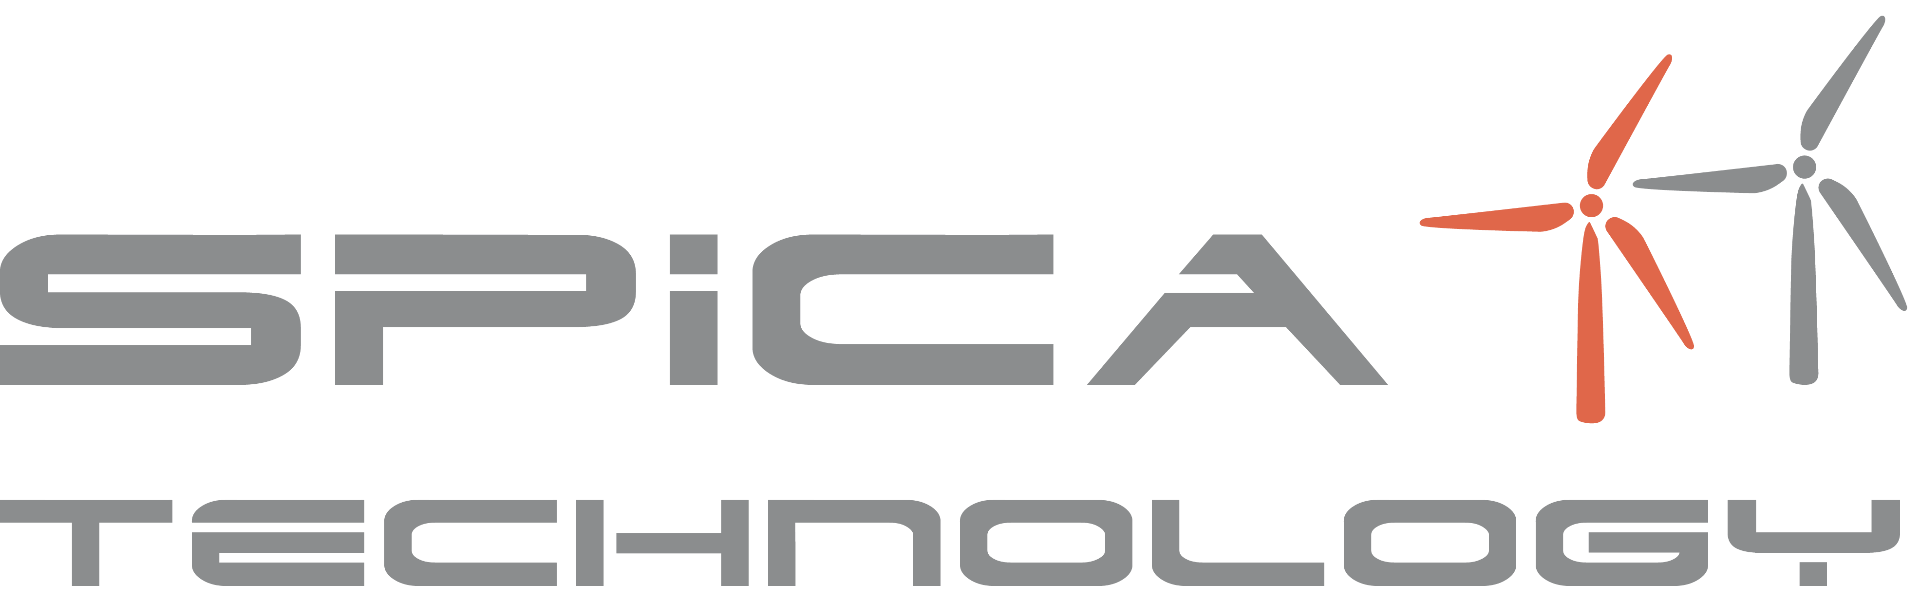 Spica Technologies logo